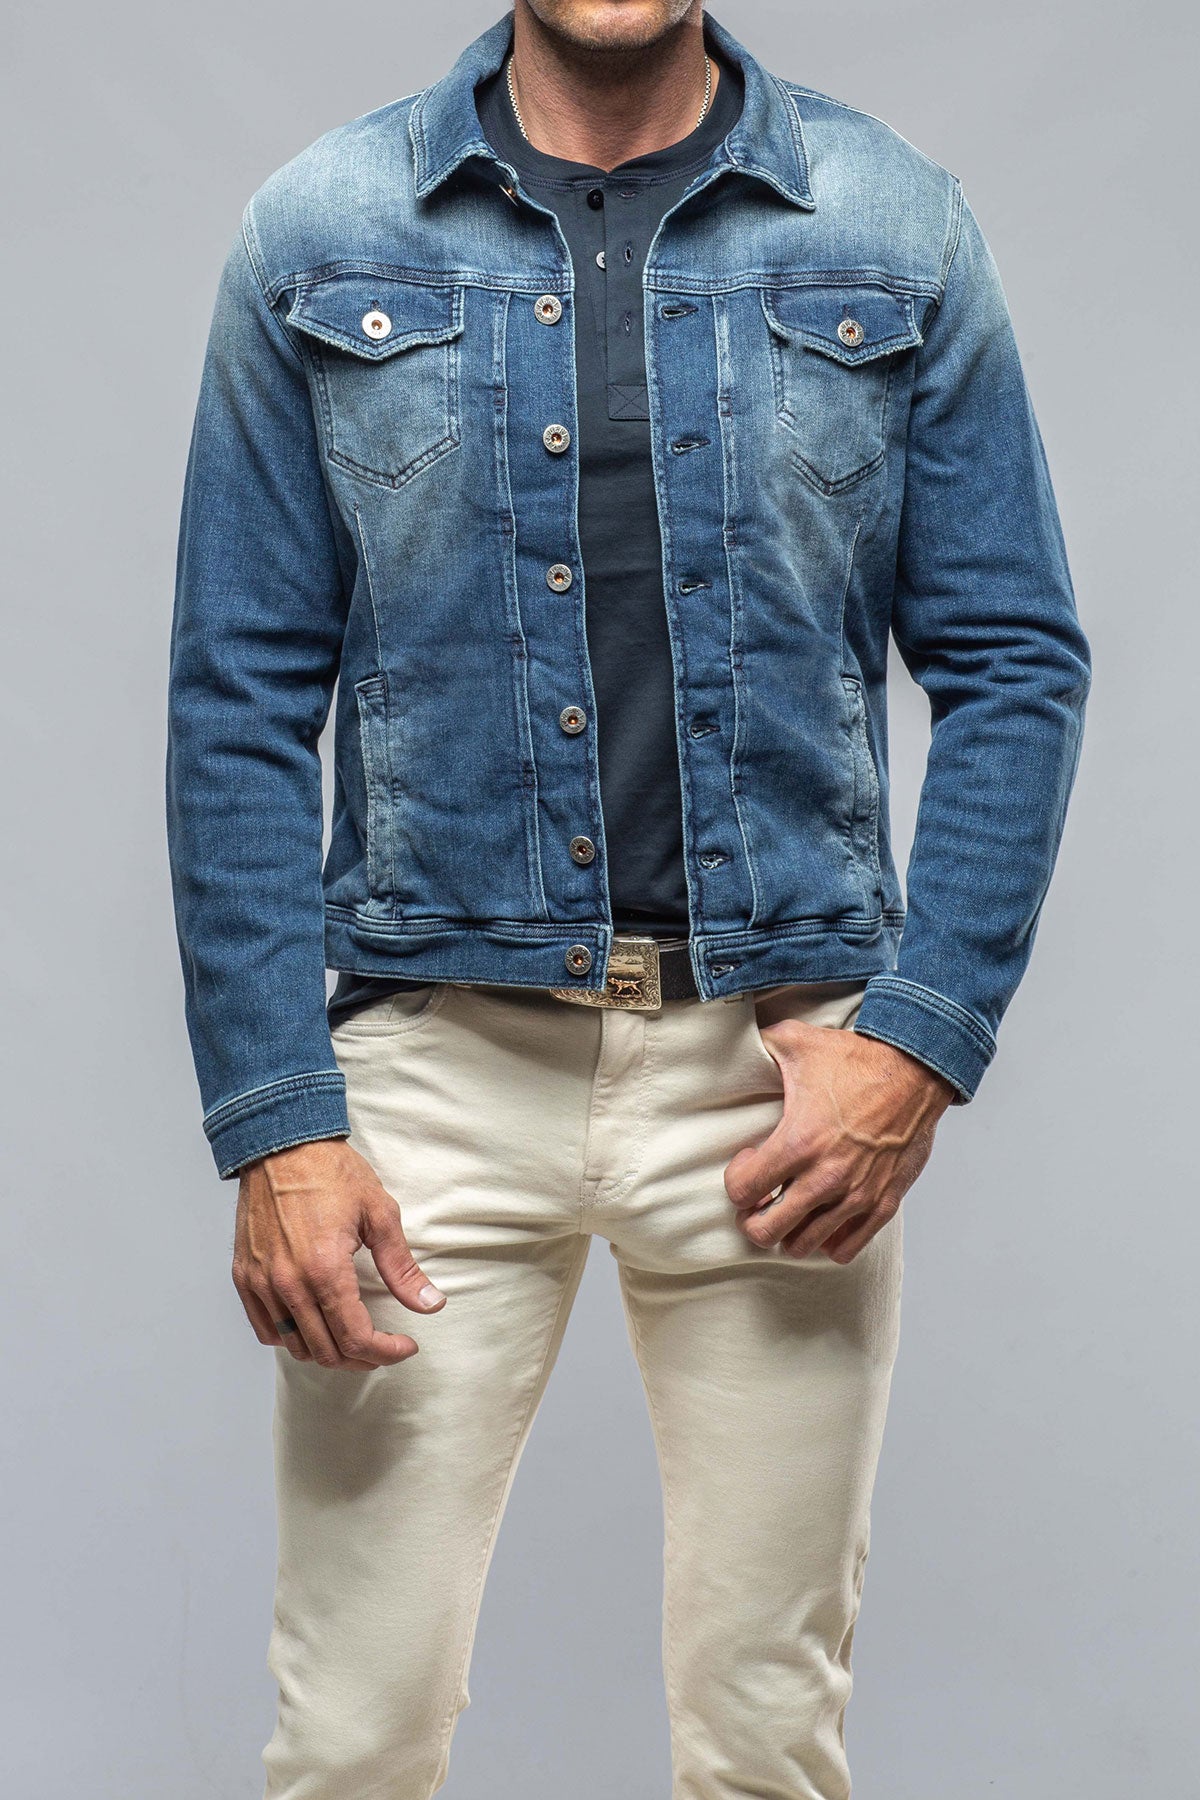 Chase Stretch Denim Jean Jacket | Mens - Outerwear - Overshirts | Teleria Zed